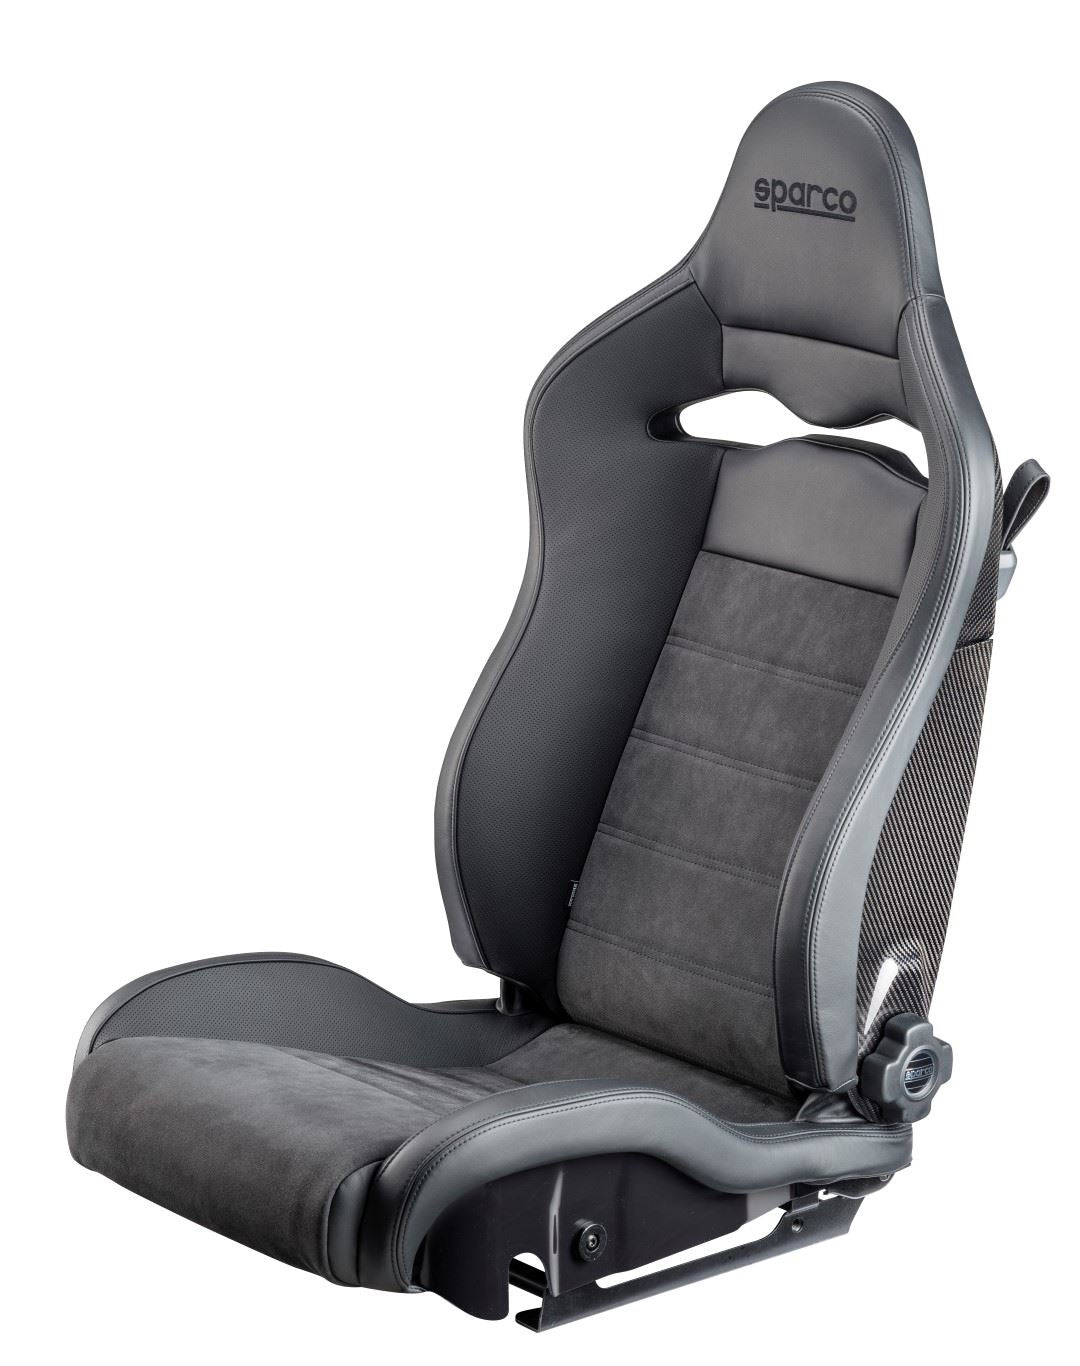 Sparco Seat SPX Leather/Alcantara Black - Left